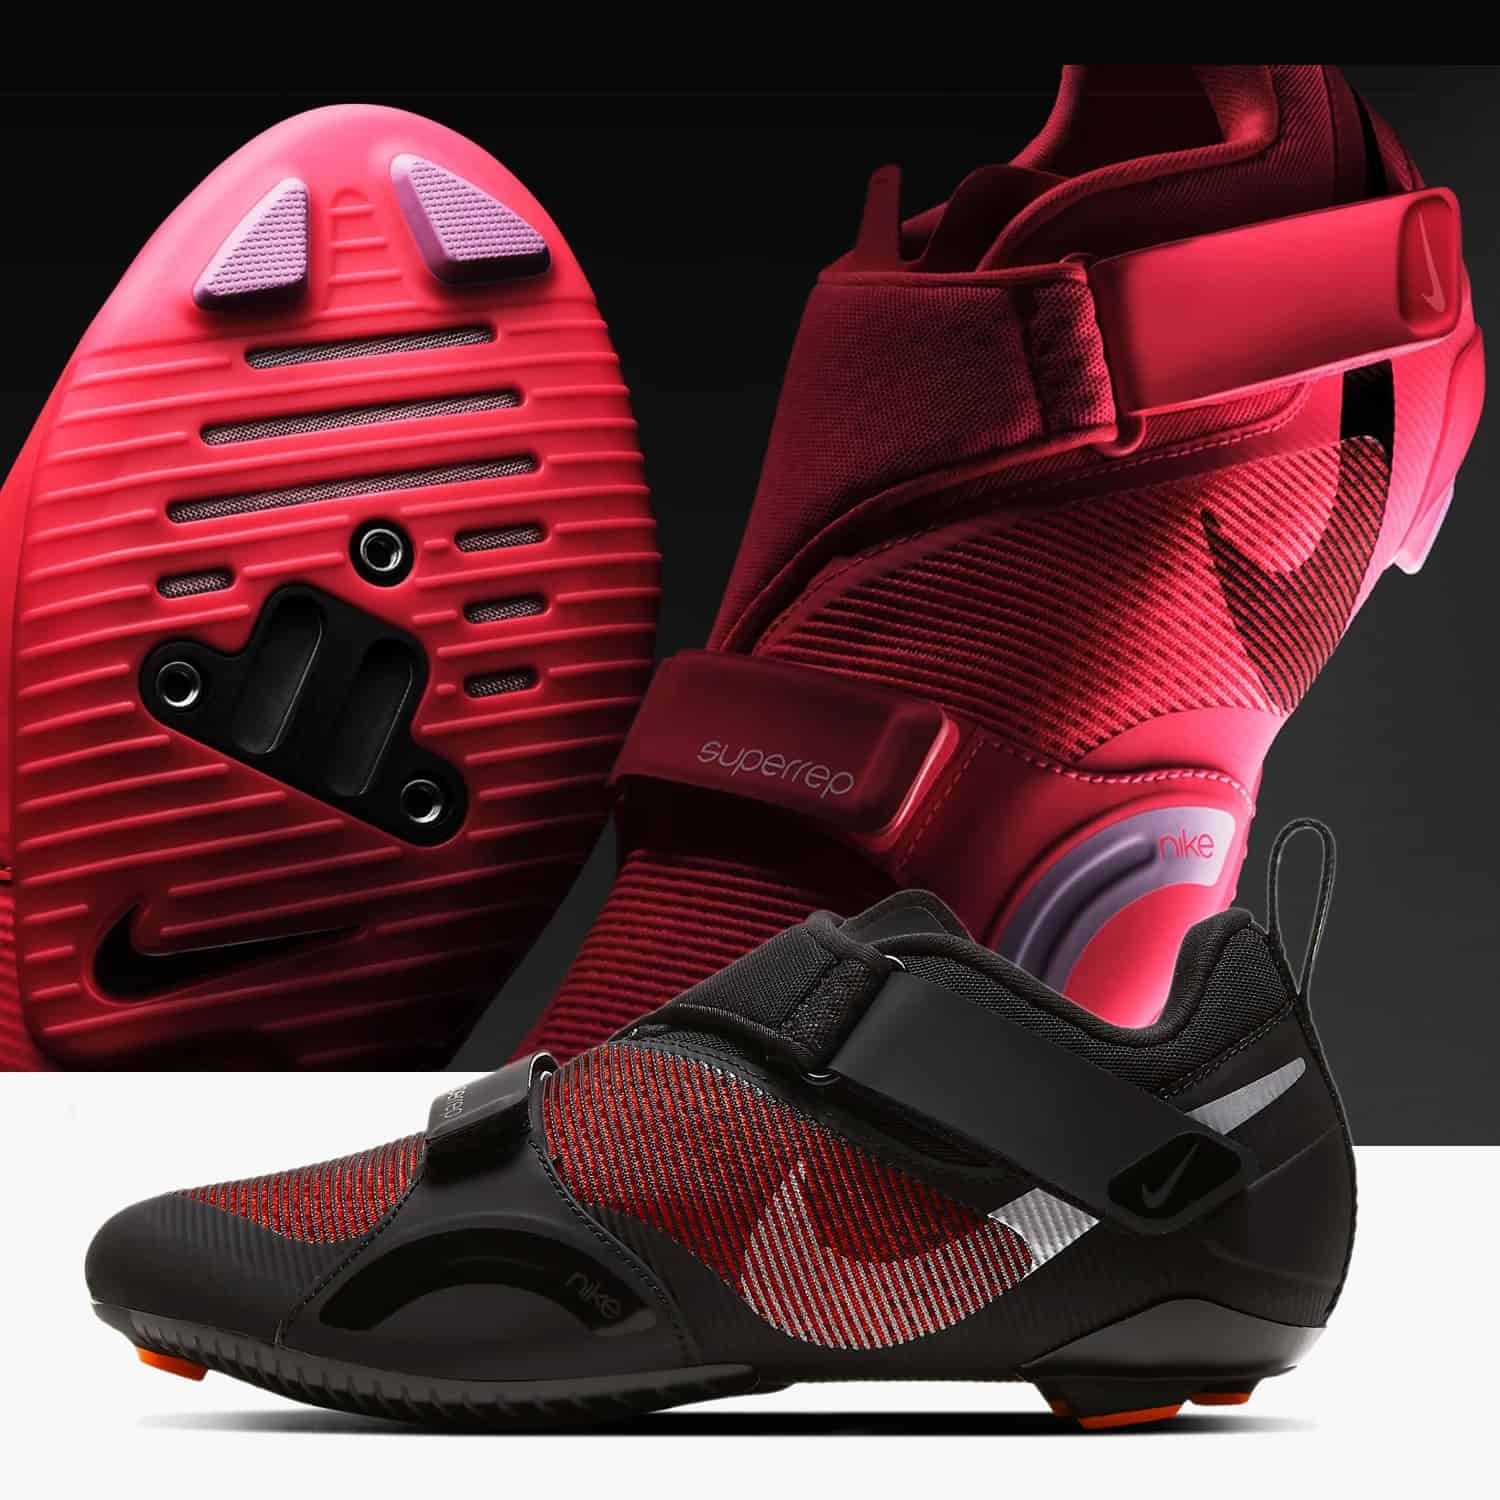 Nike Poggio IV 4UL Cycling Shoes - Carbon Fiber - Black/Silver/Yellow  -Men's 6.5 | eBay